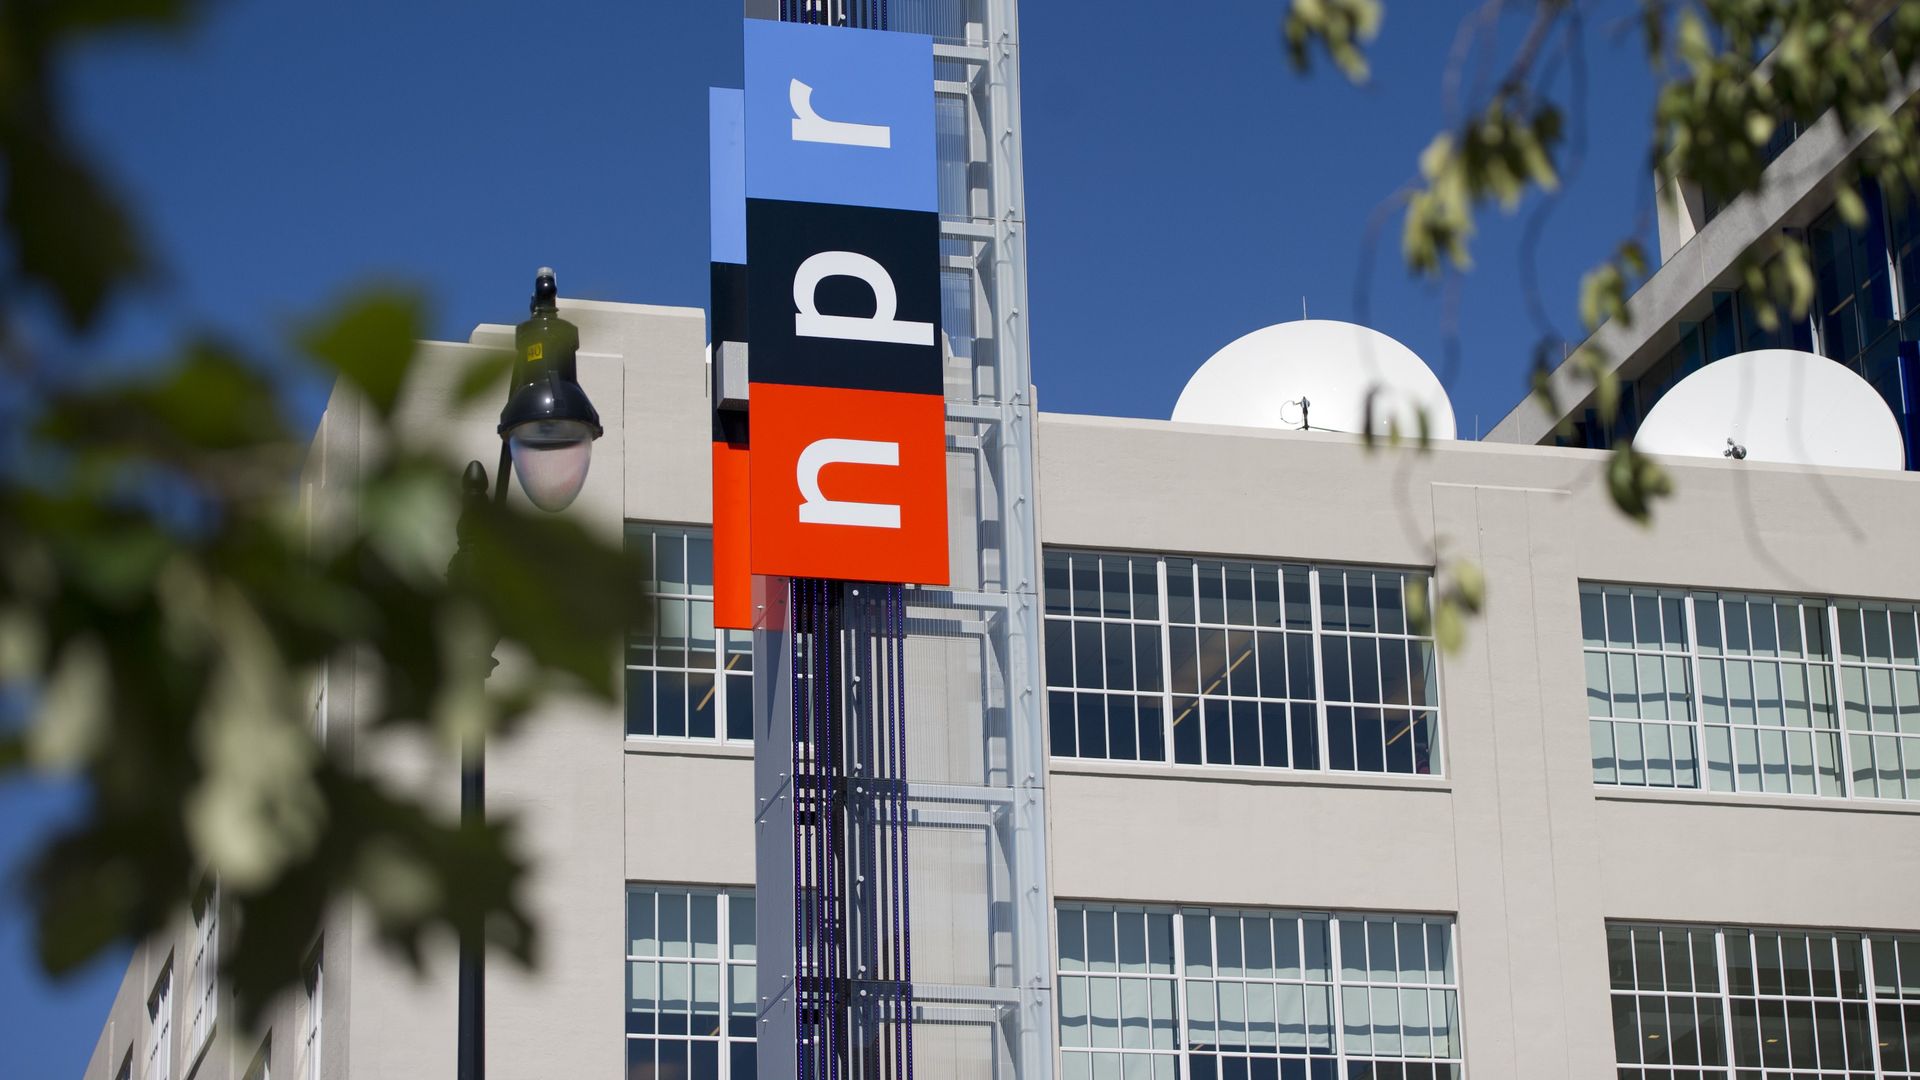 NPR's headquarters in Washington.